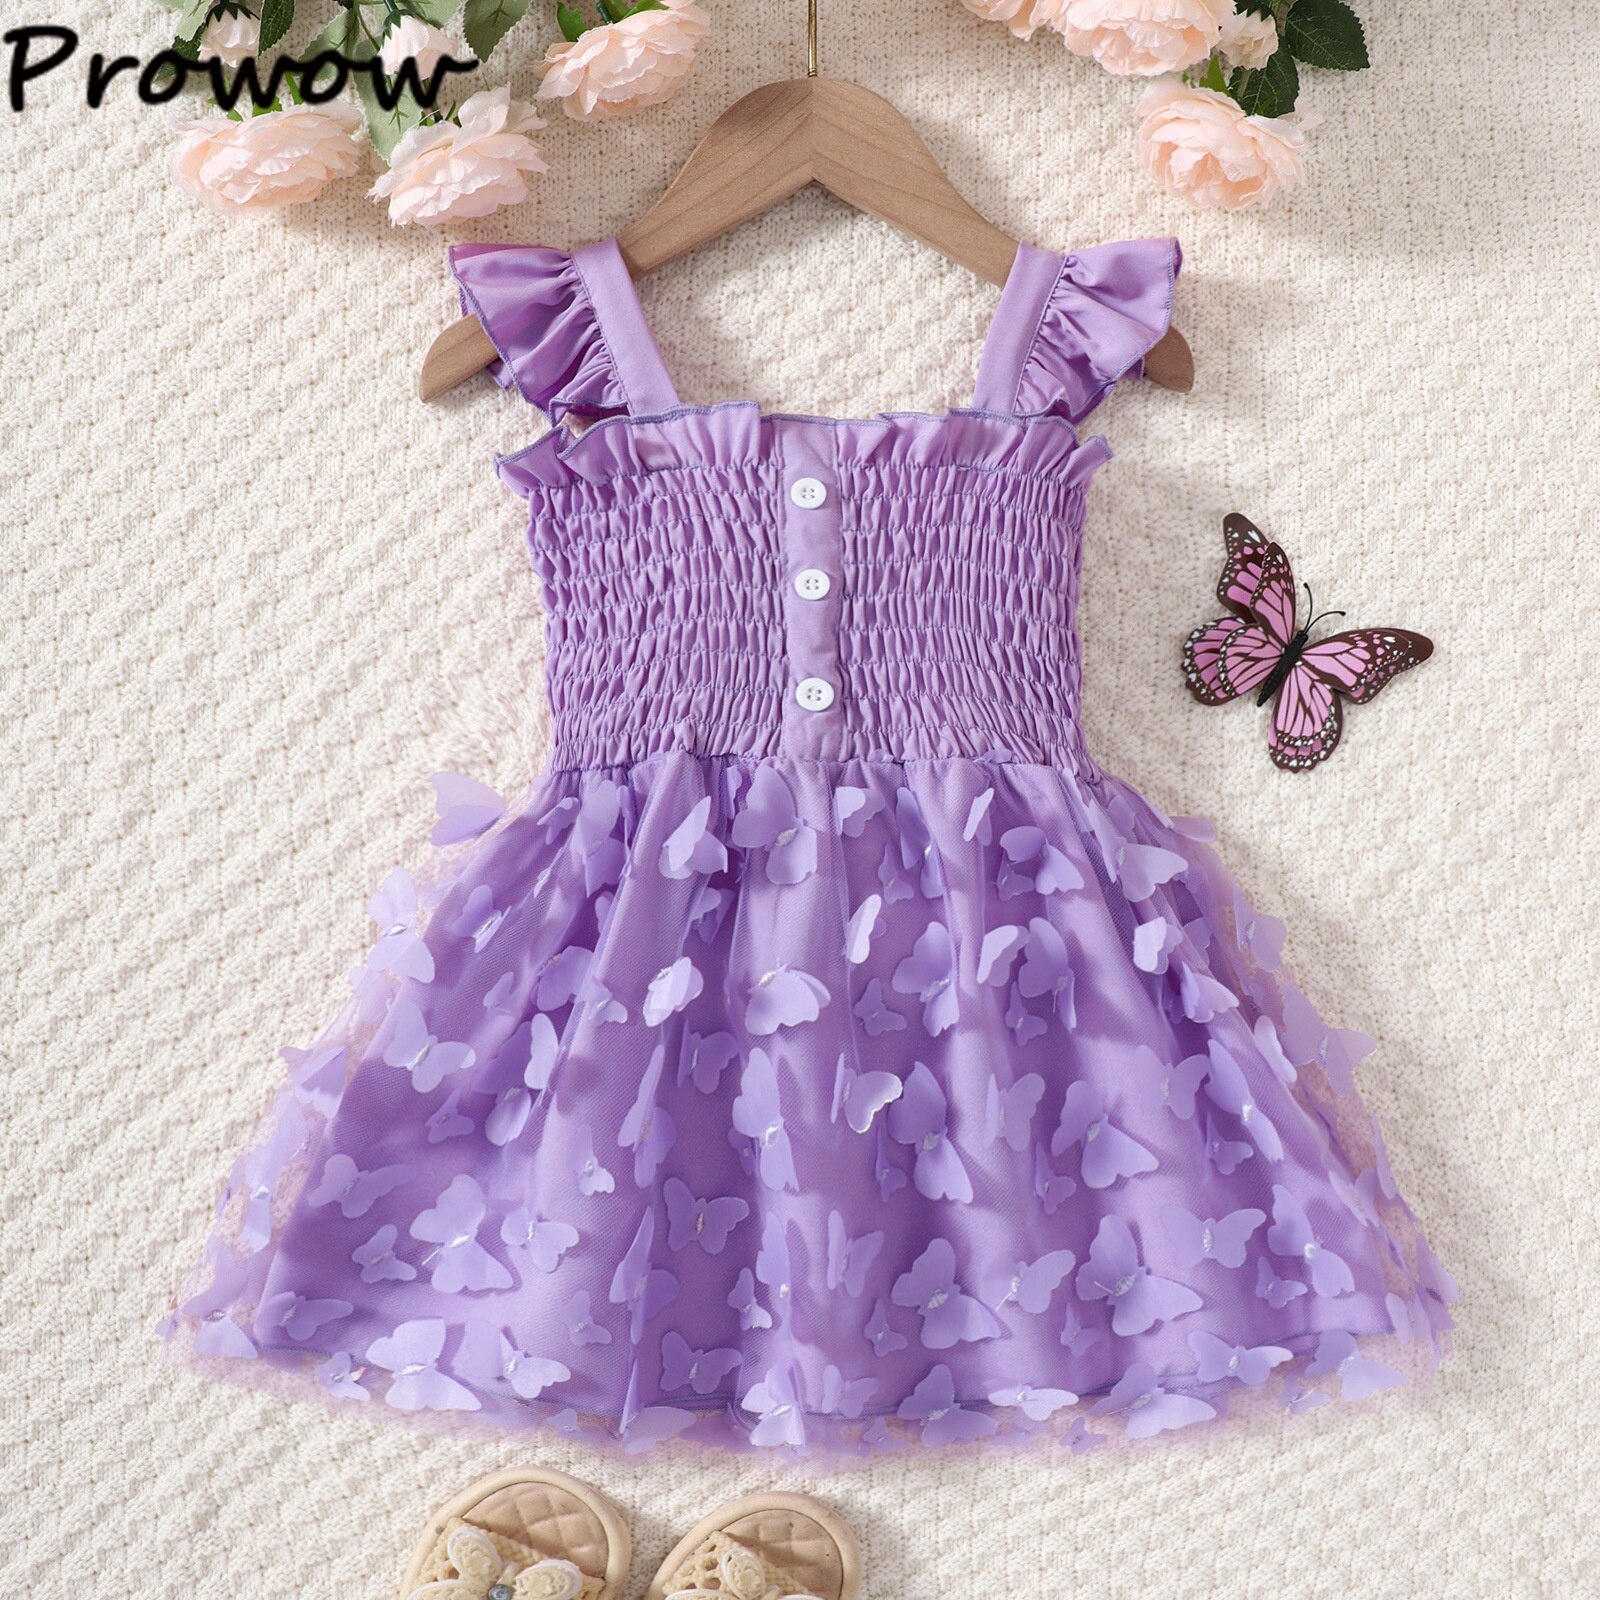 Prowow-1-5Y-Girl-Birthday-Dresses-Summer-Sleeveless-Spaghetti-Peplum-Butterfly-Child-Dress-For-Girls-Baby-3